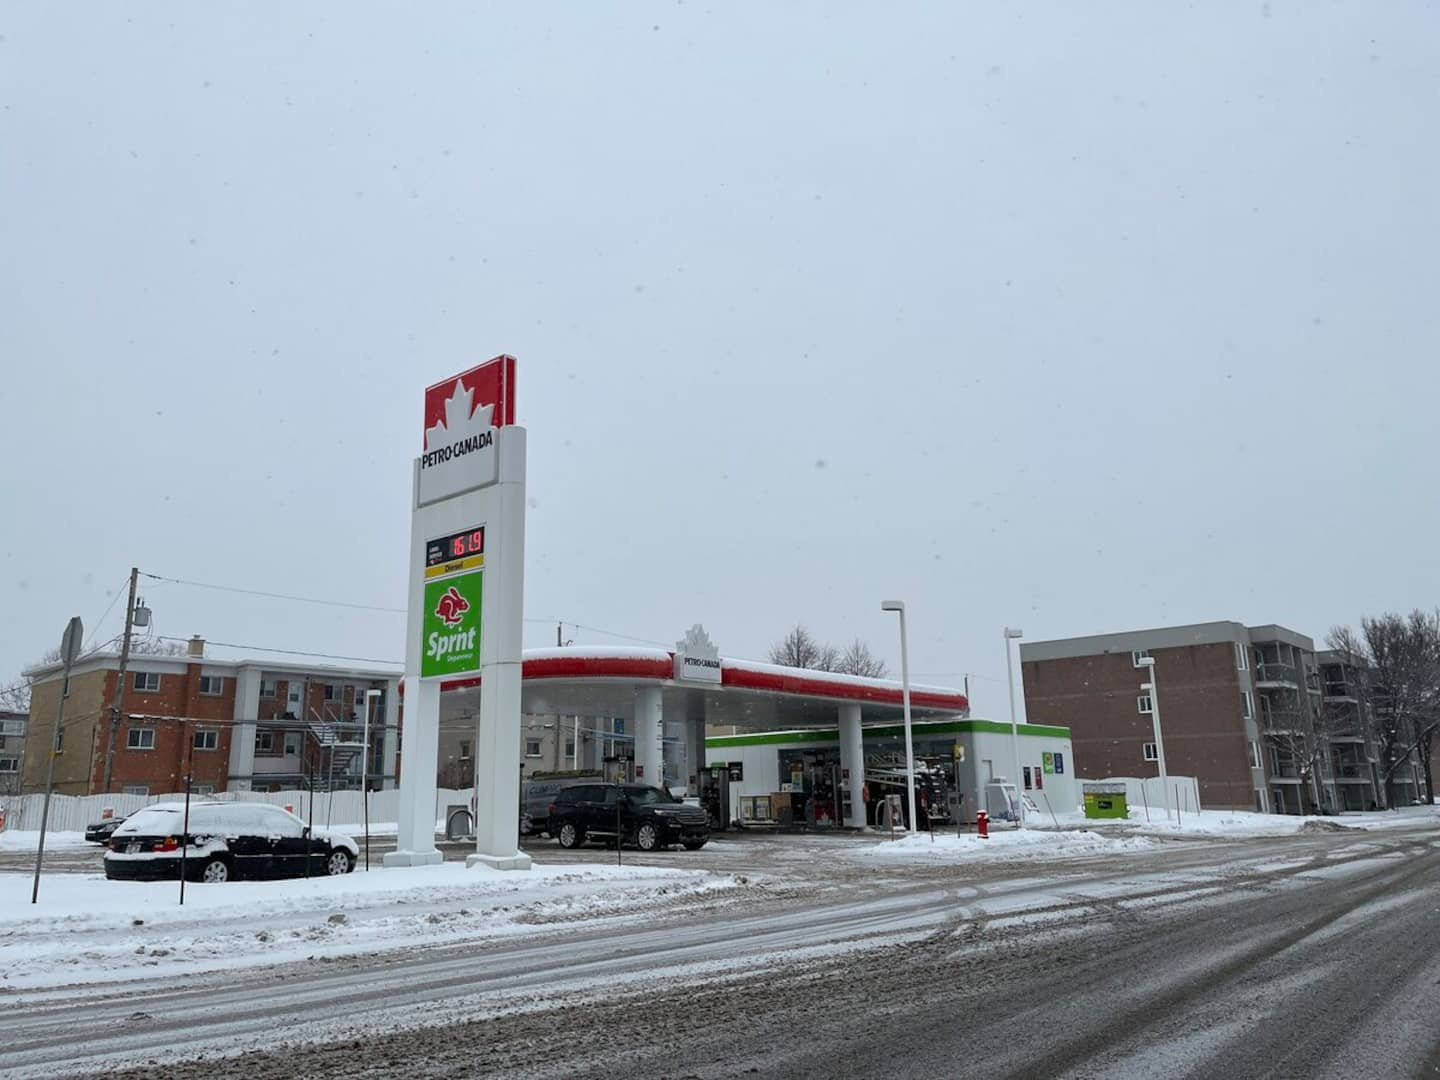 Gasoline jumps in 24 hours in Quebec